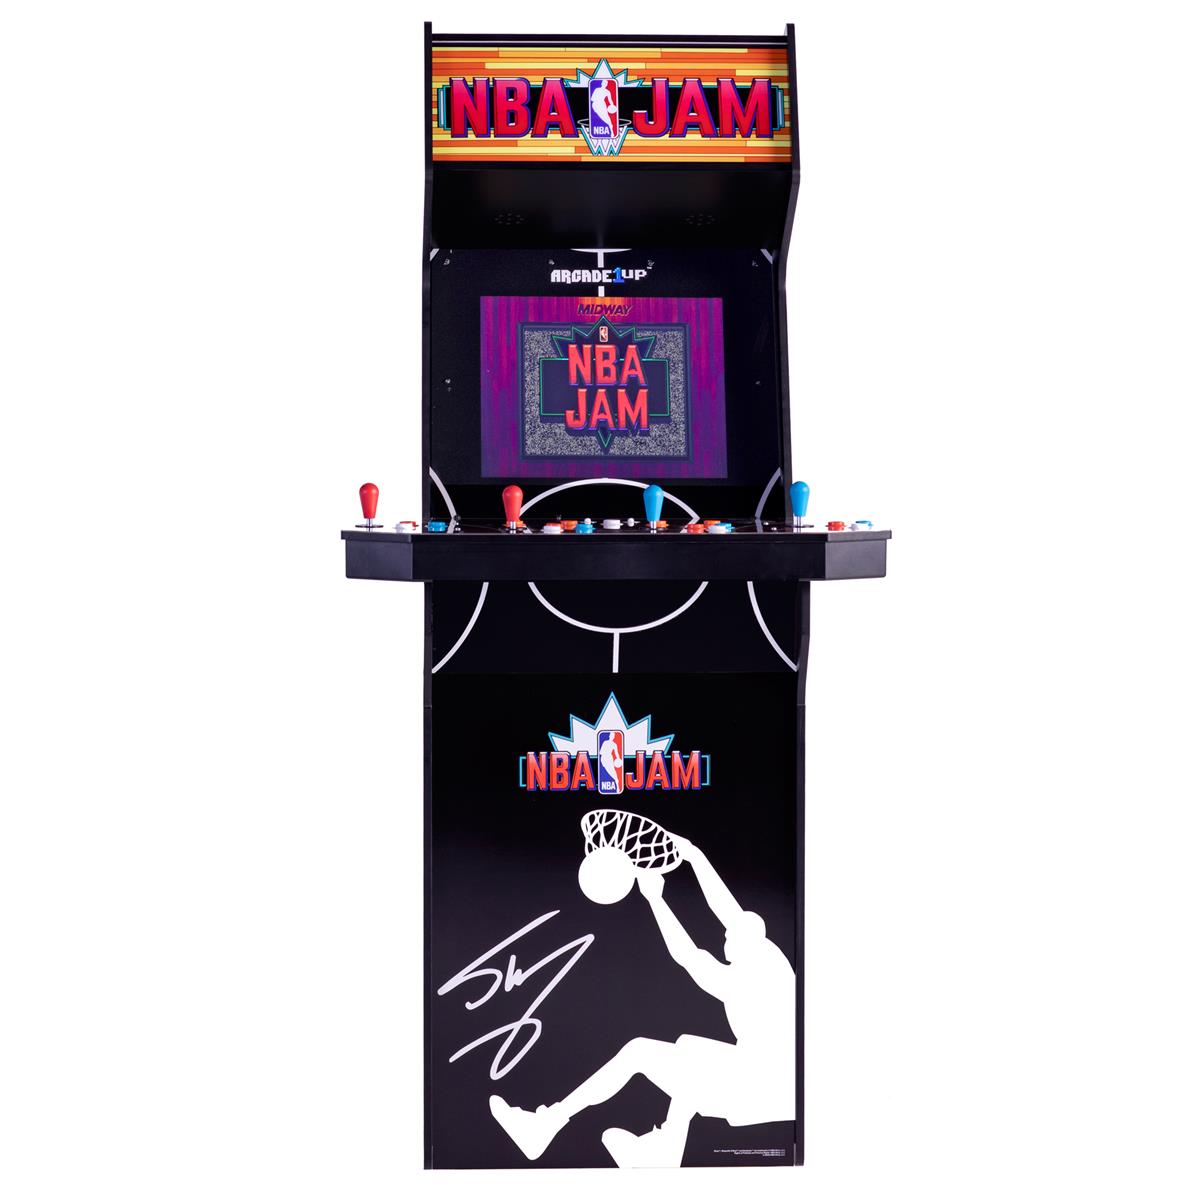 Arcade1Up NBA JAM: SHAQ EDITION Arcade Game Machine - New